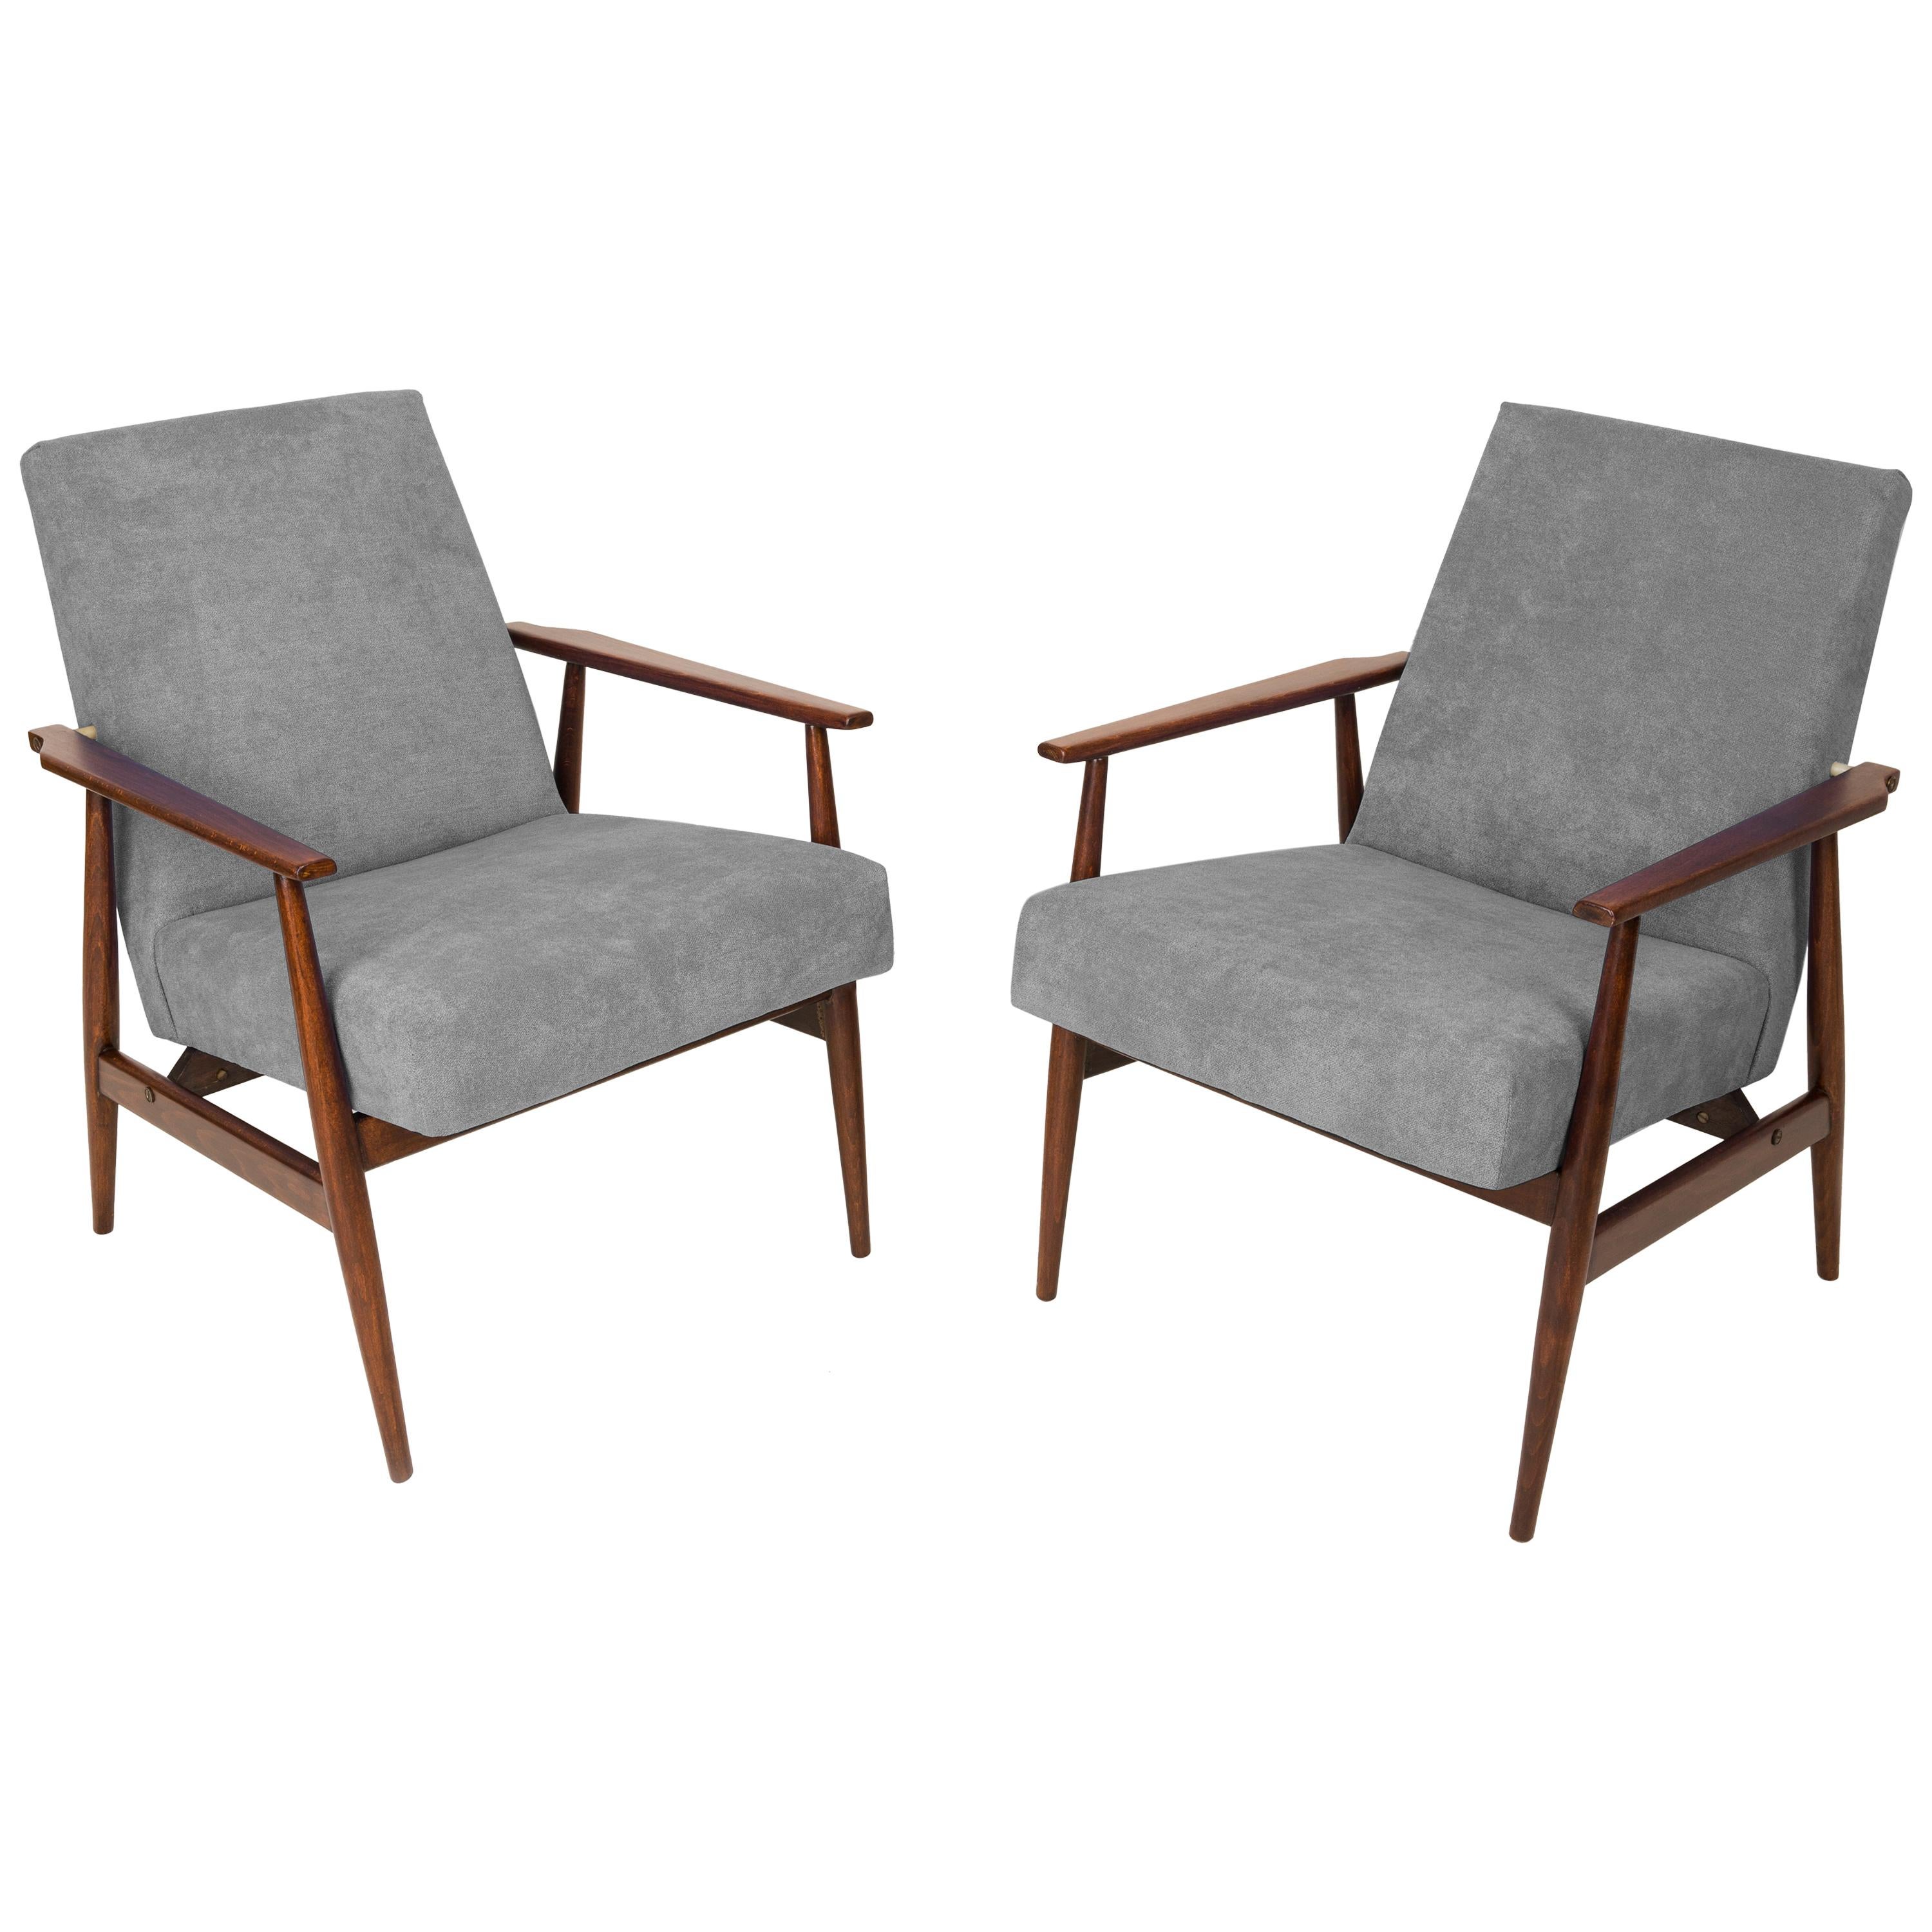 Paar graue Dante-Sessel des 20. Jahrhunderts, H. Lis, 1960er Jahre